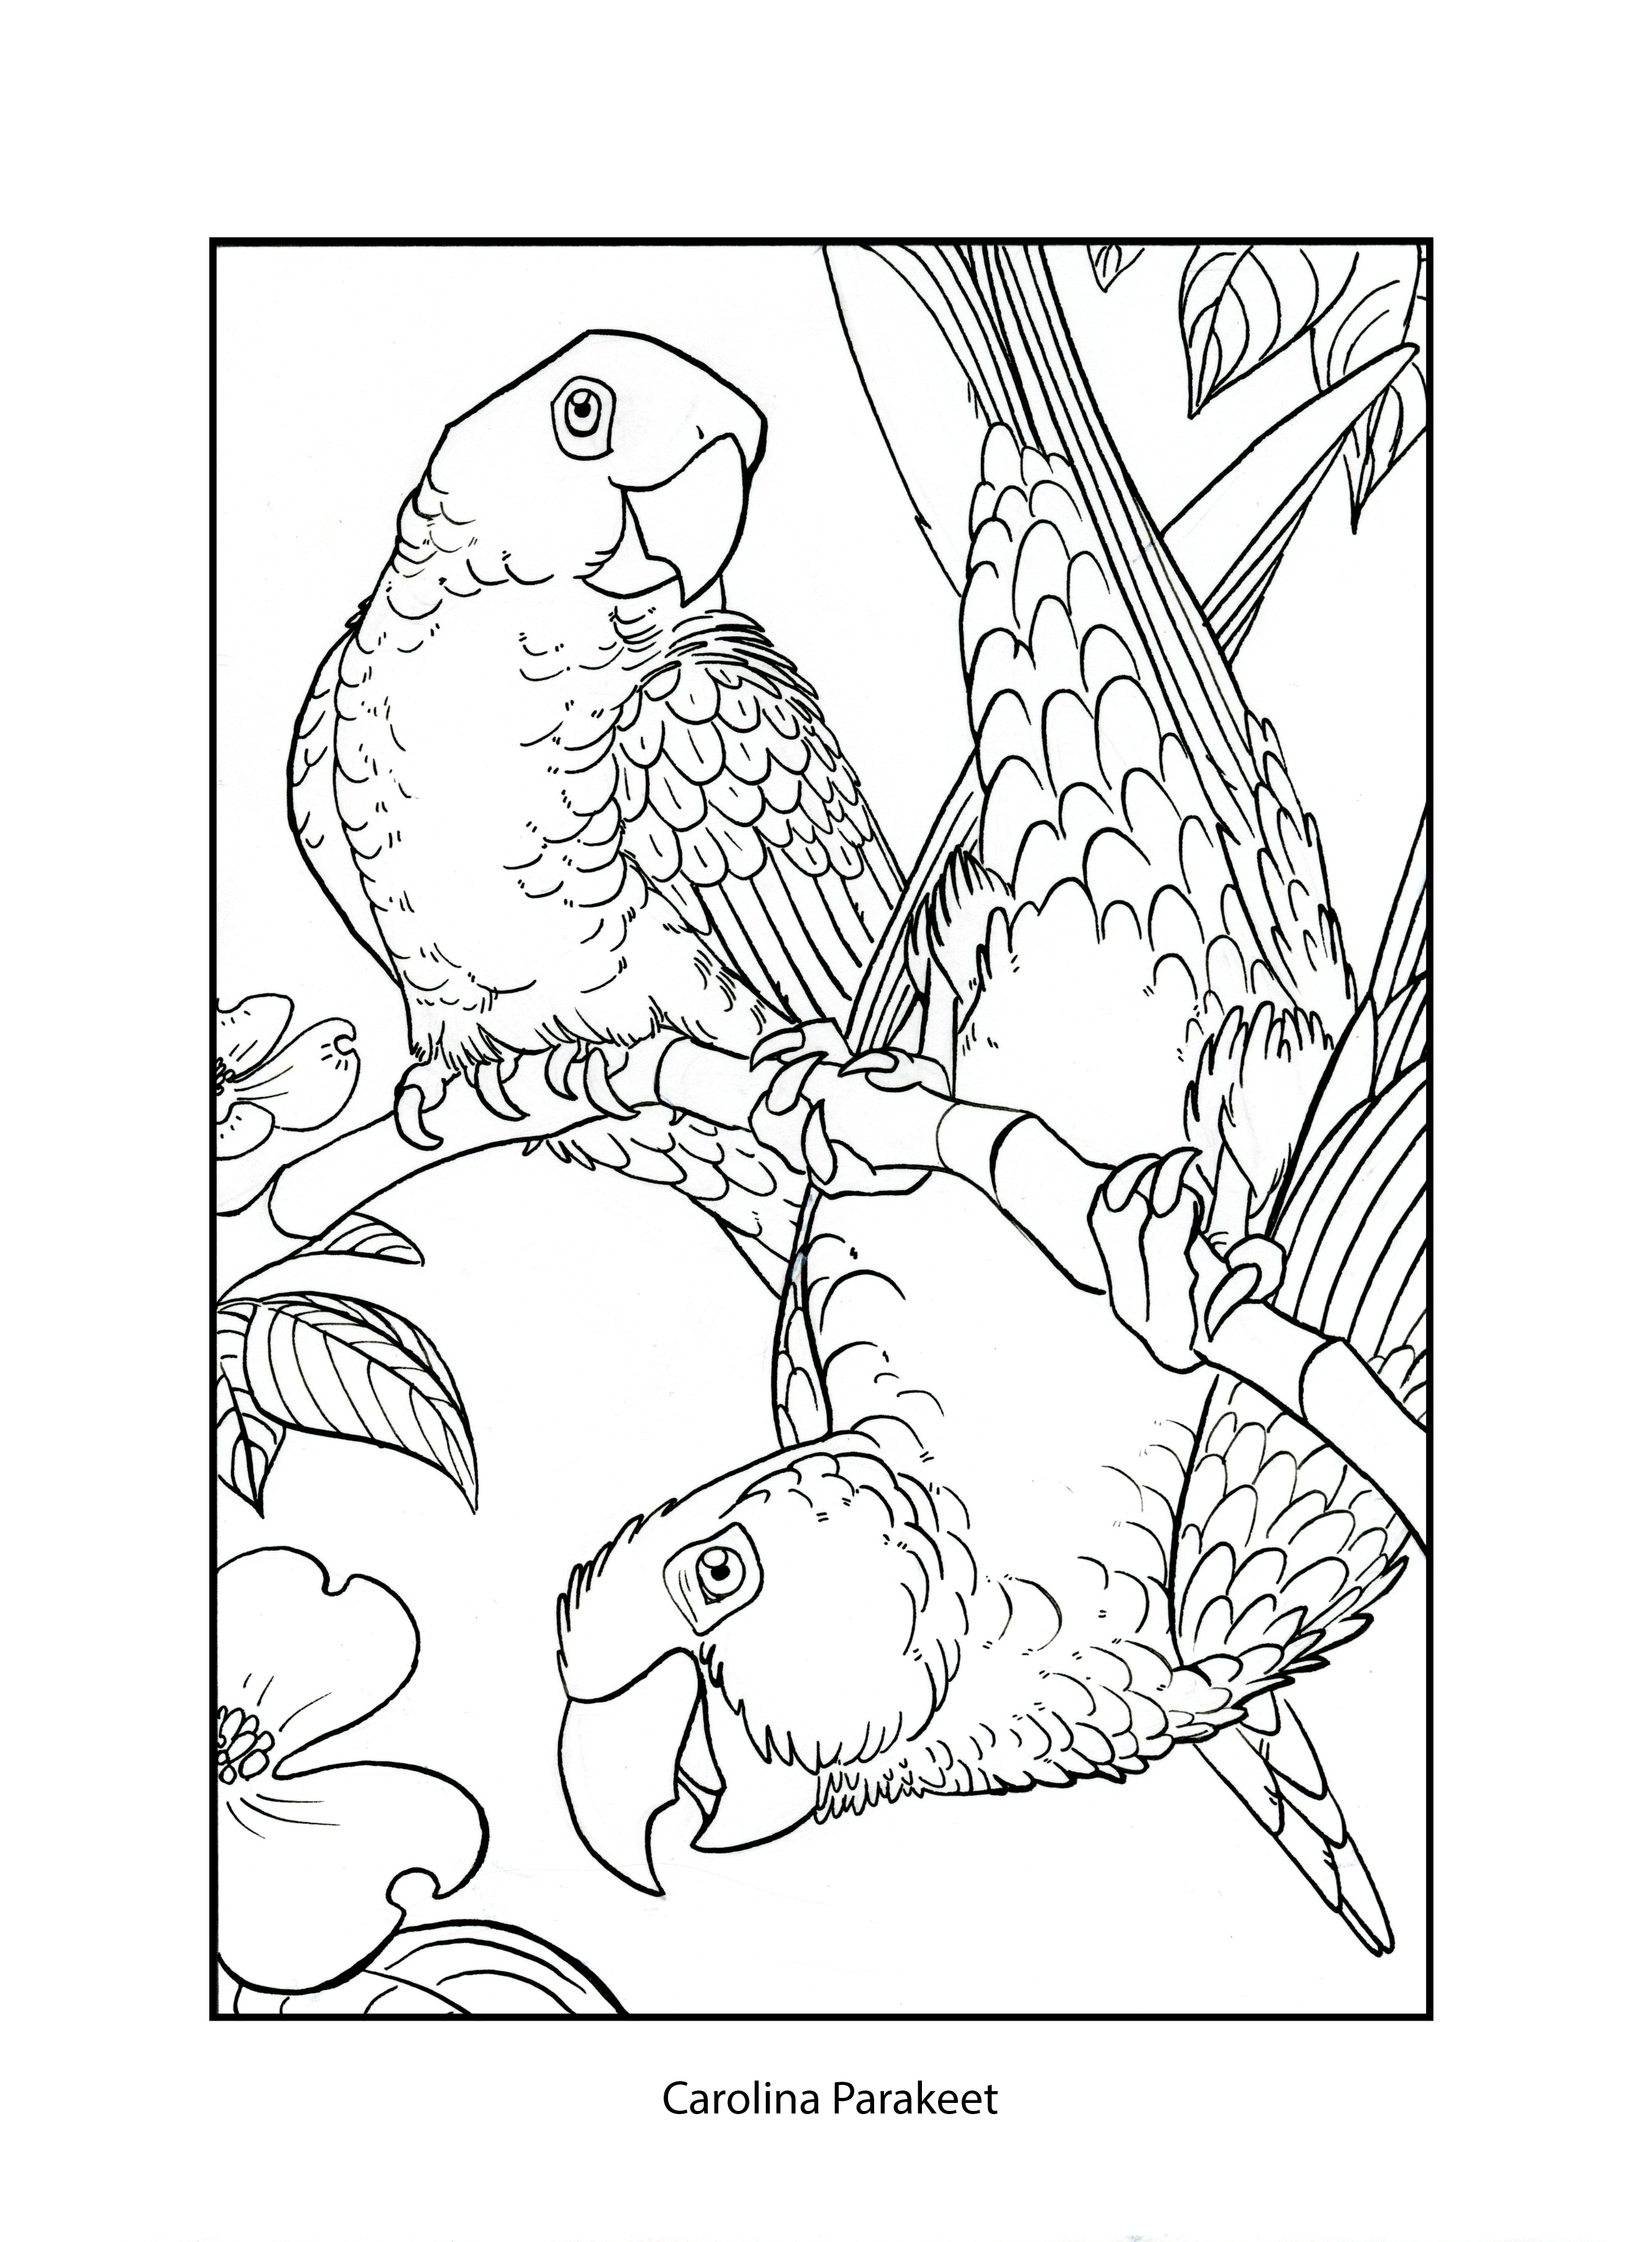 Carolina Parakeet coloring #1, Download drawings